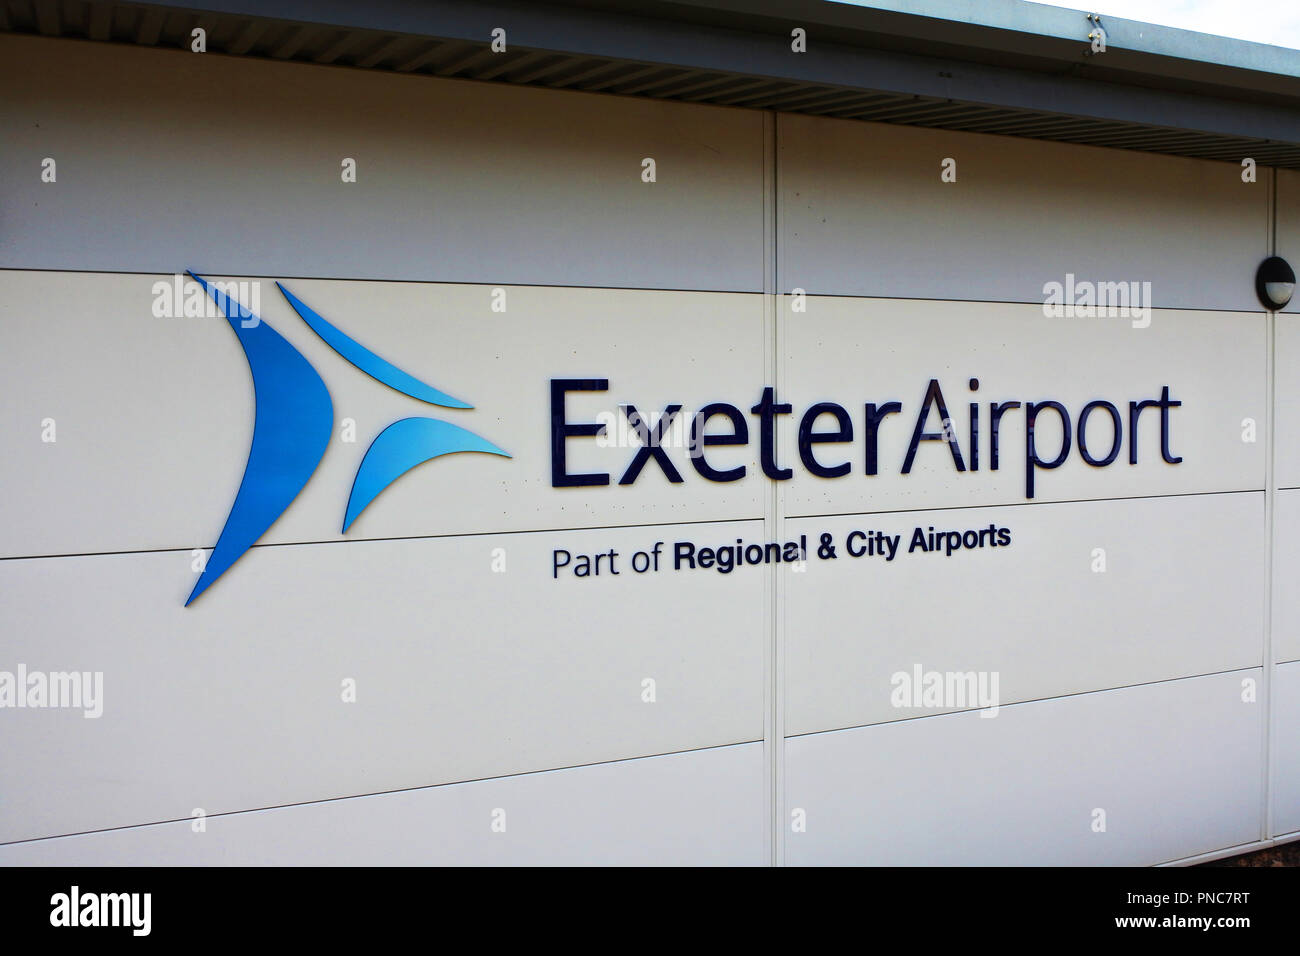 Exterior view of Exeter Airport terminal, Devon, UK - John Gollop Stock Photo